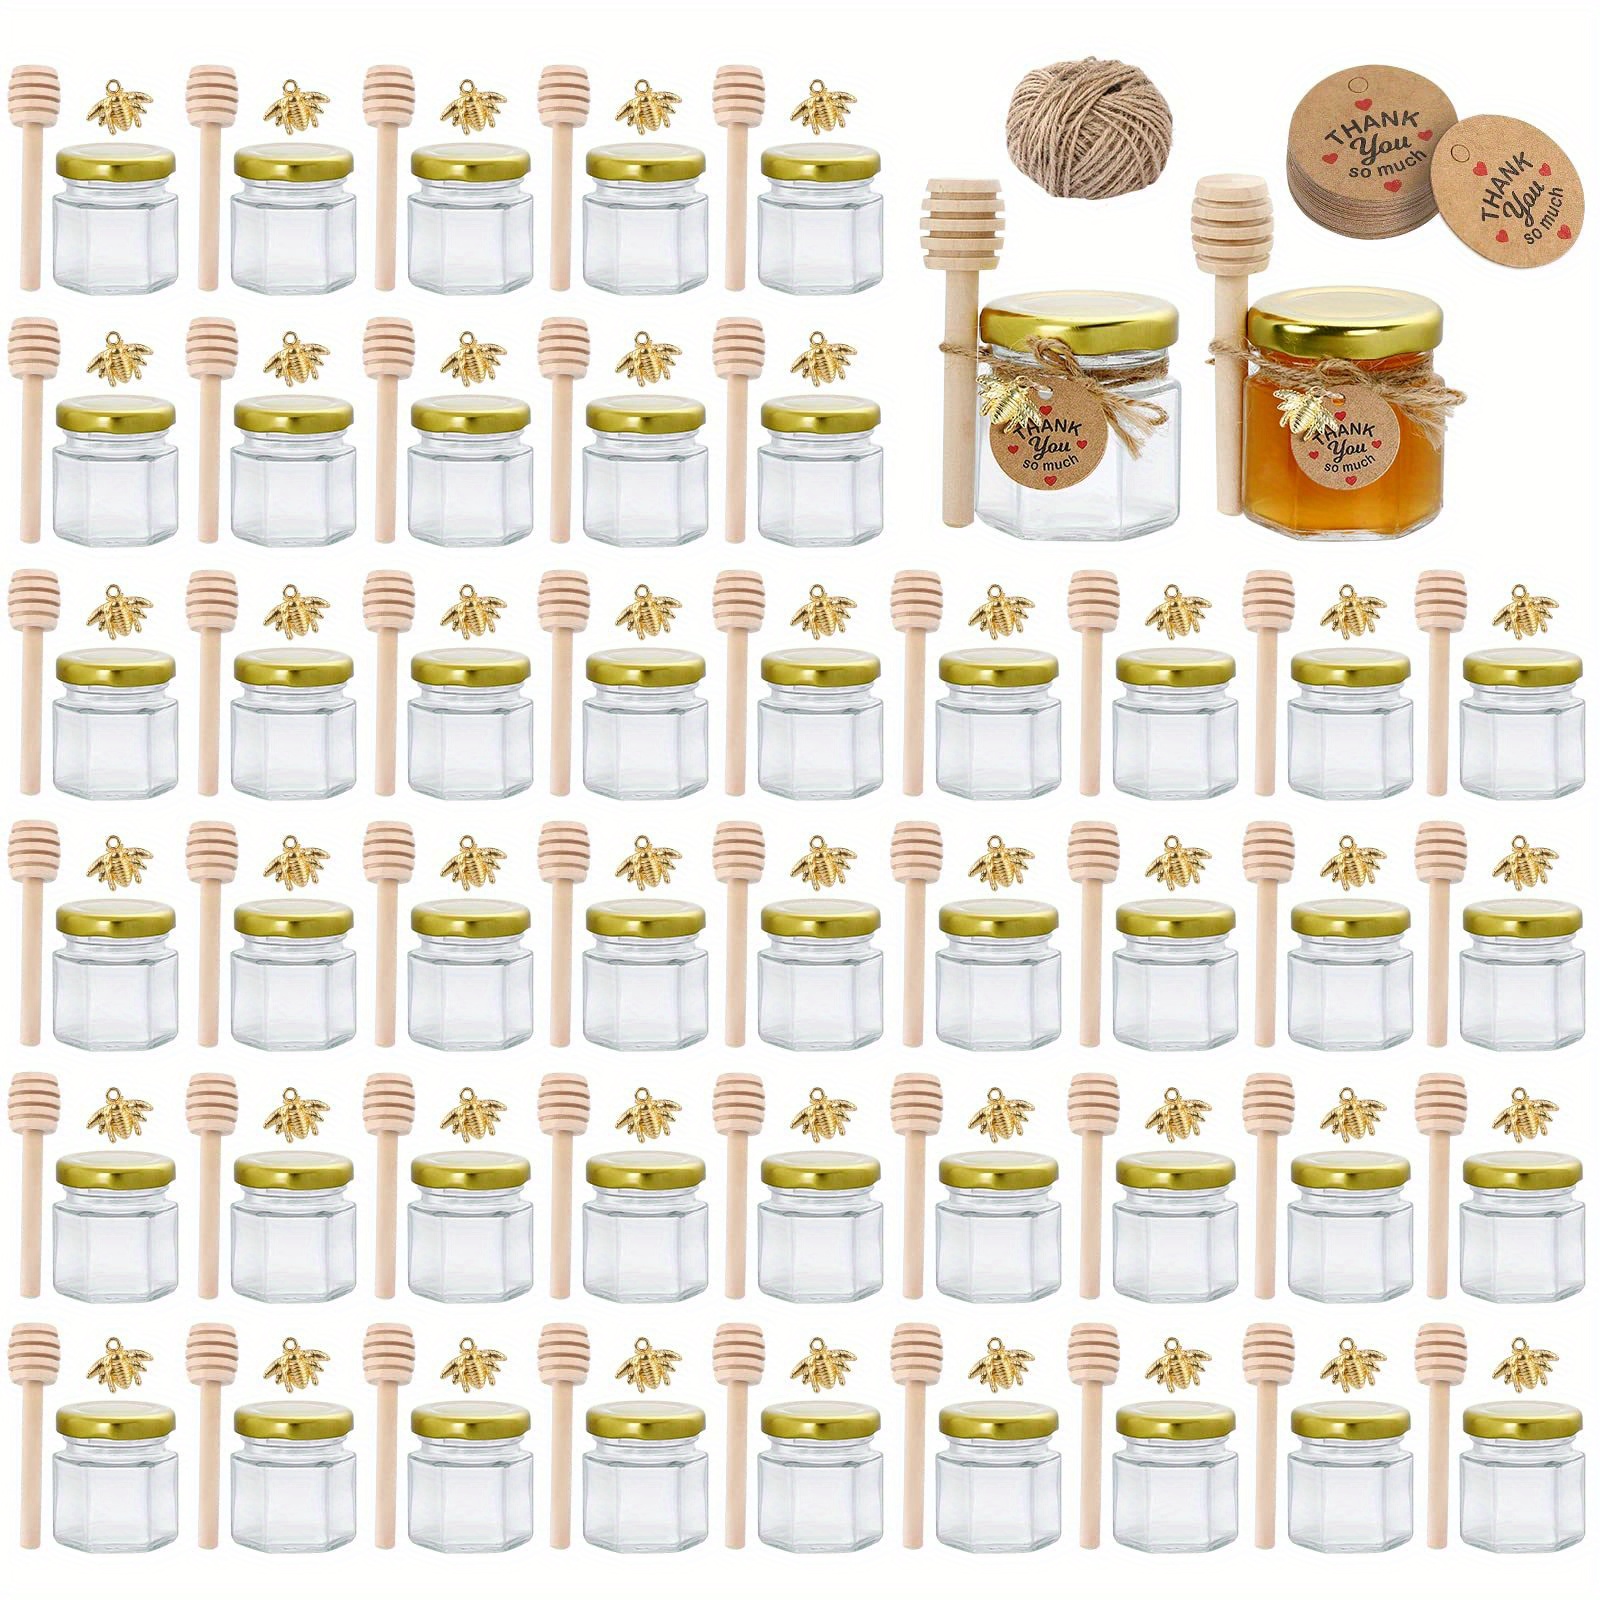 Mini honey jars 1 DOZEN - TruBee Honey